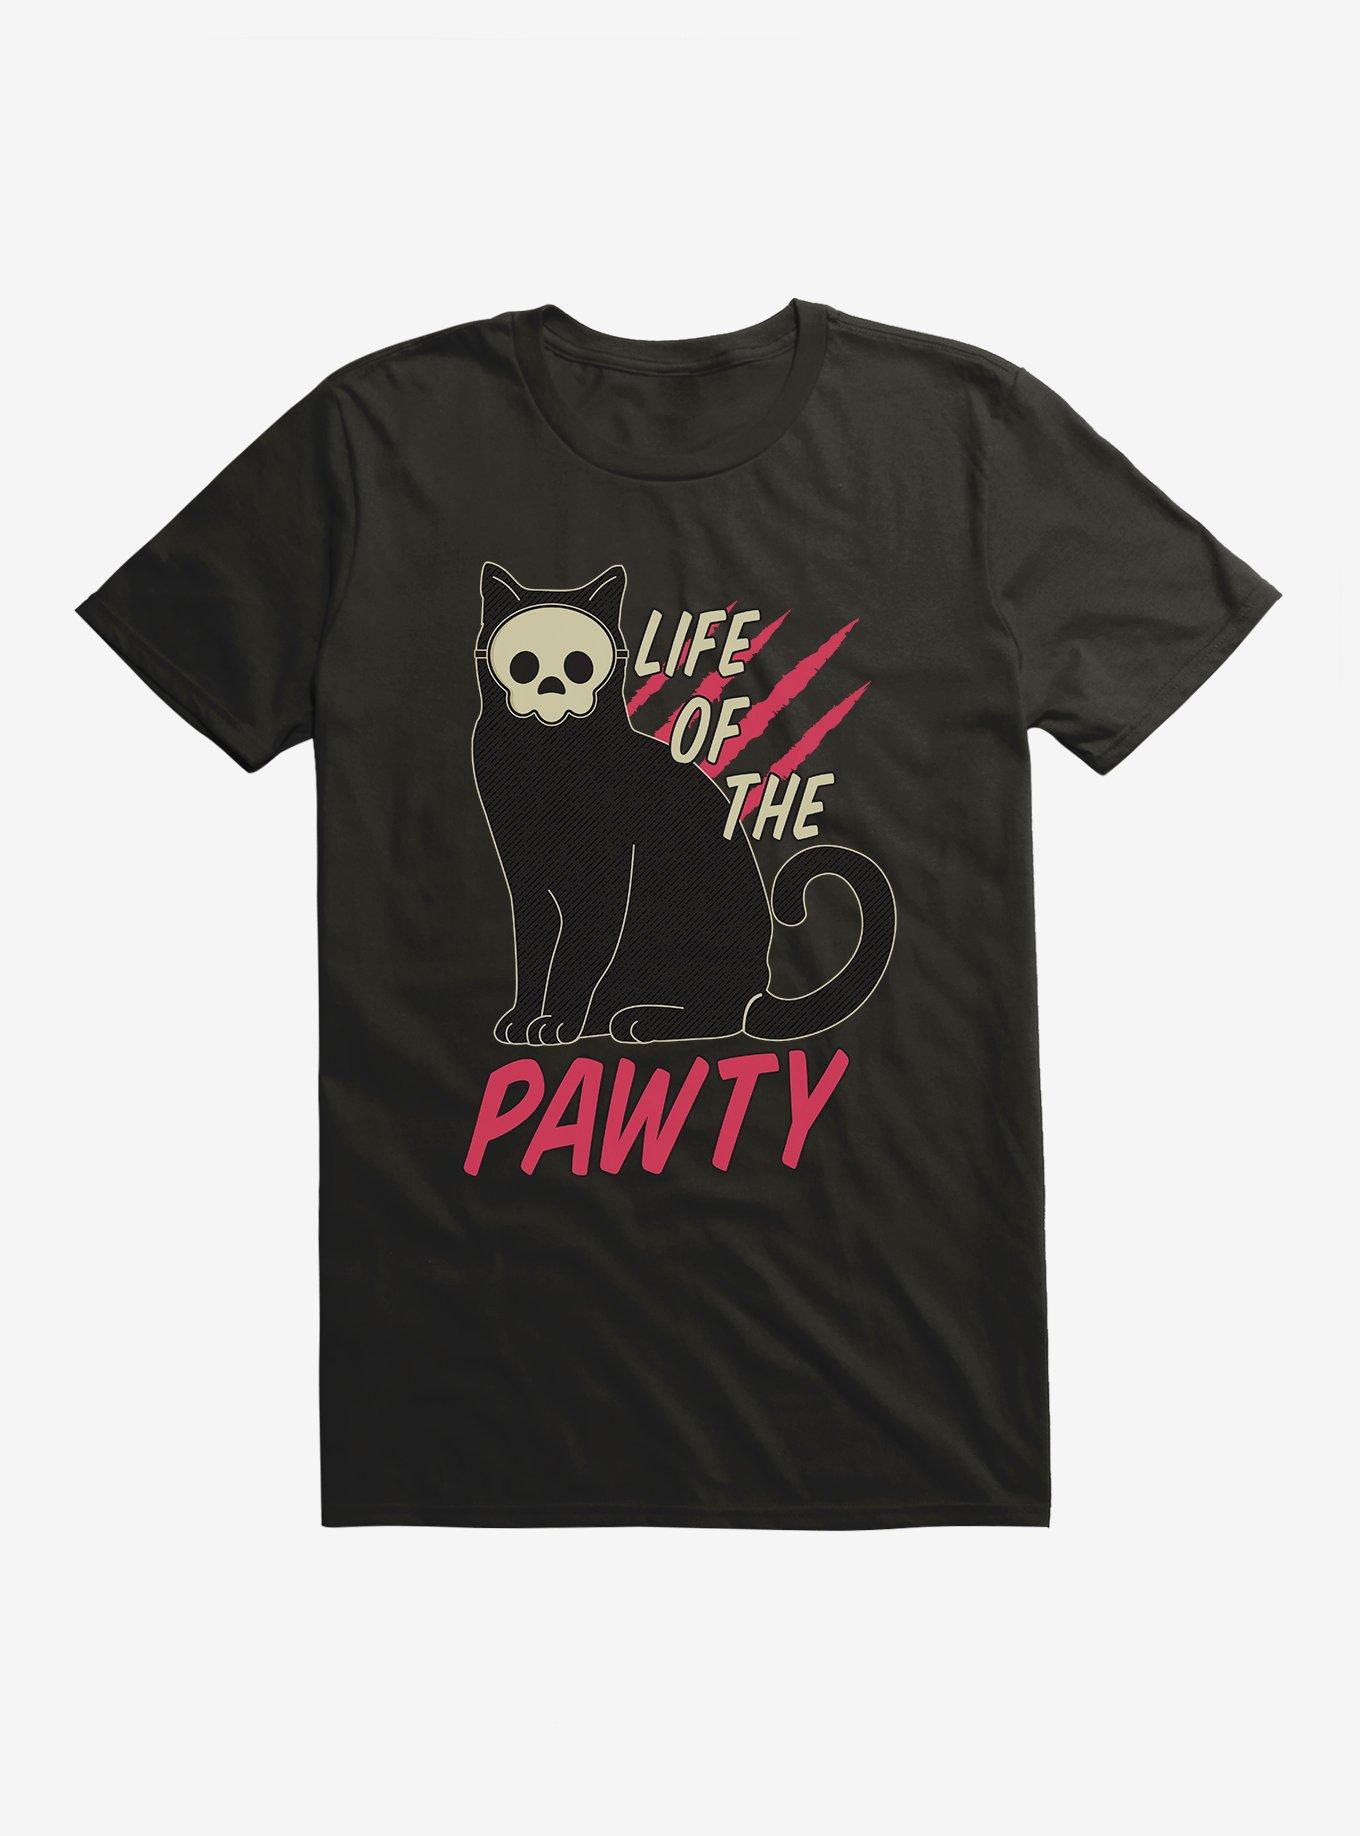 Cats Pawty Life T-Shirt